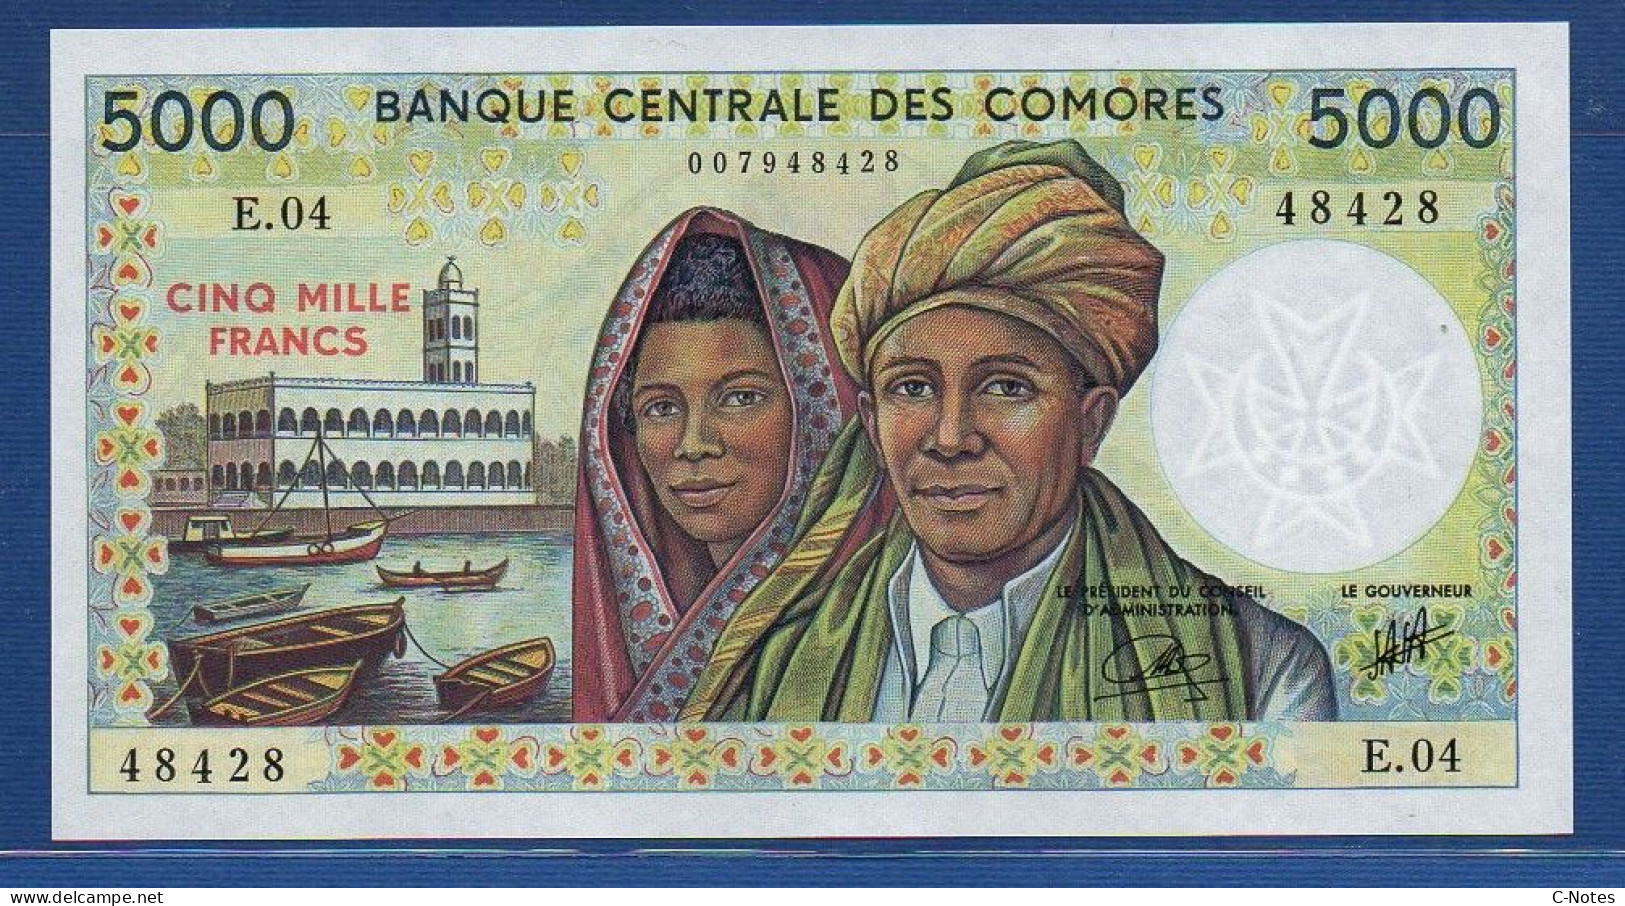 COMOROS - P.12b – 5000 Francs ND (1984 - 2005) UNC, S/n E.04 48428 - Comoros